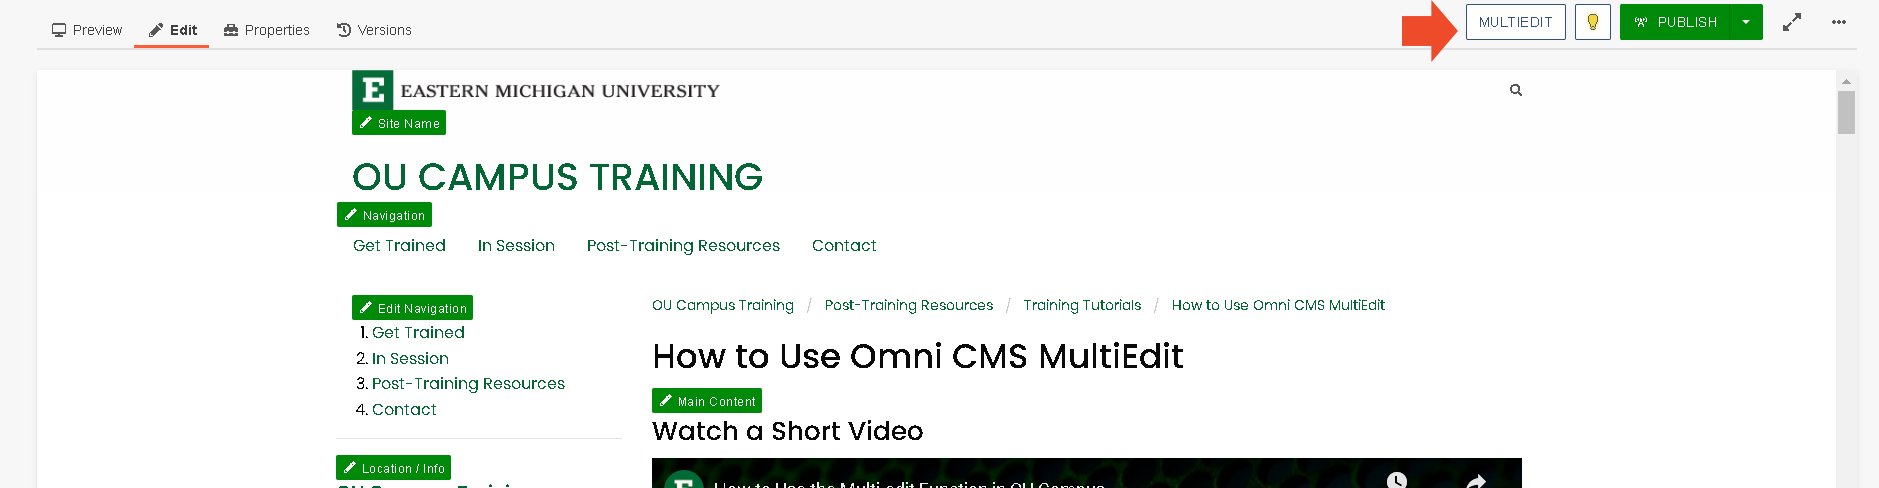 Using Omni CMS MultiEdit